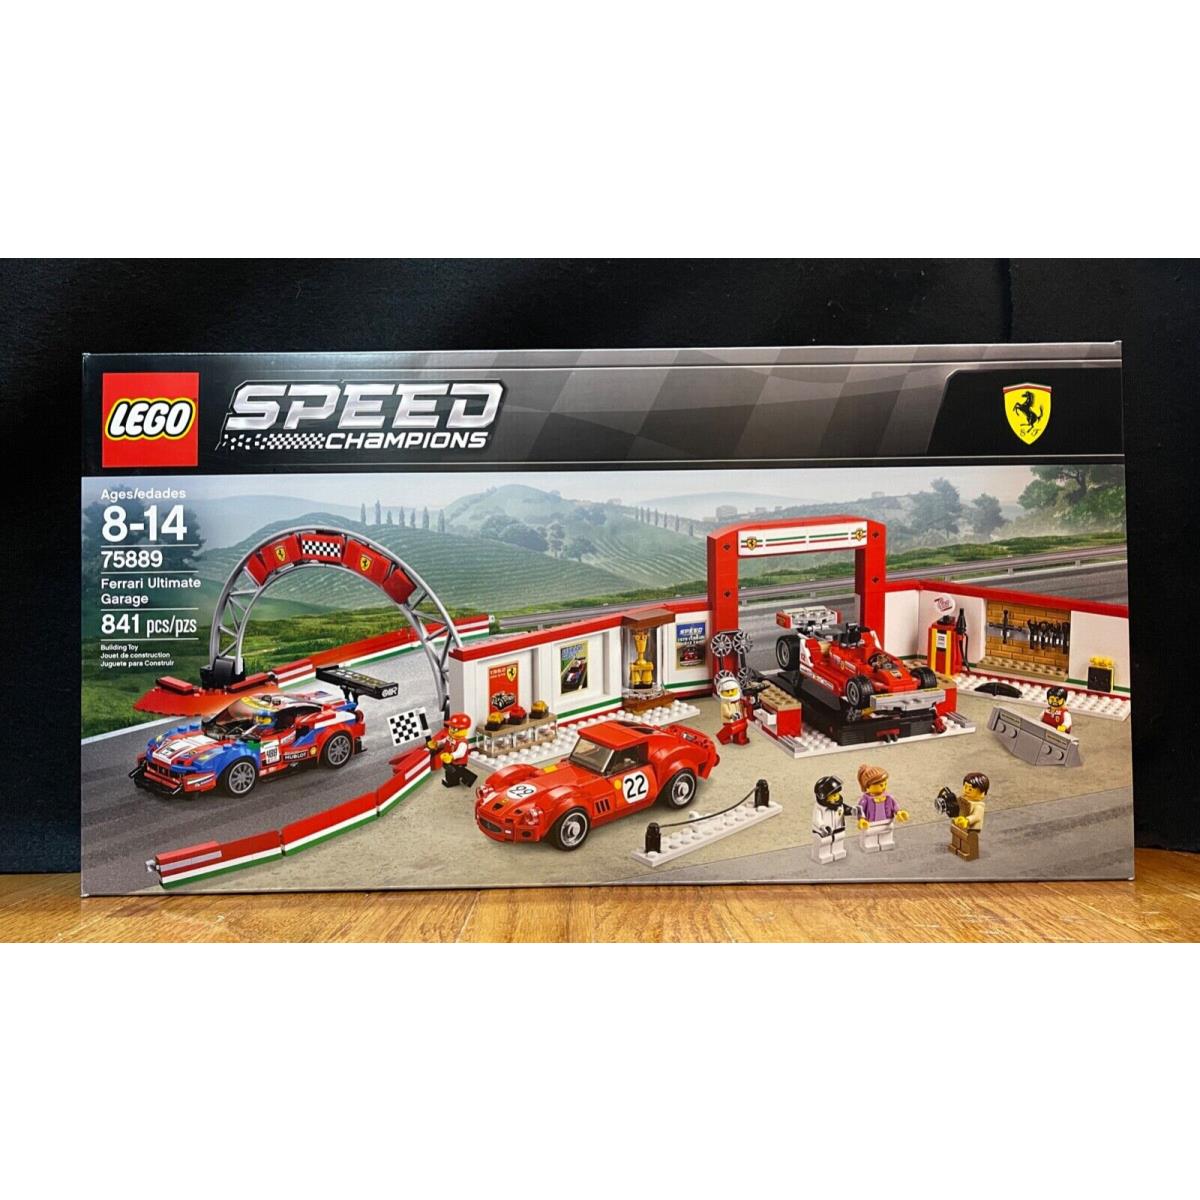 Lego 75889 2018 Speed Champions Ferrari Ultimate Garage Retired